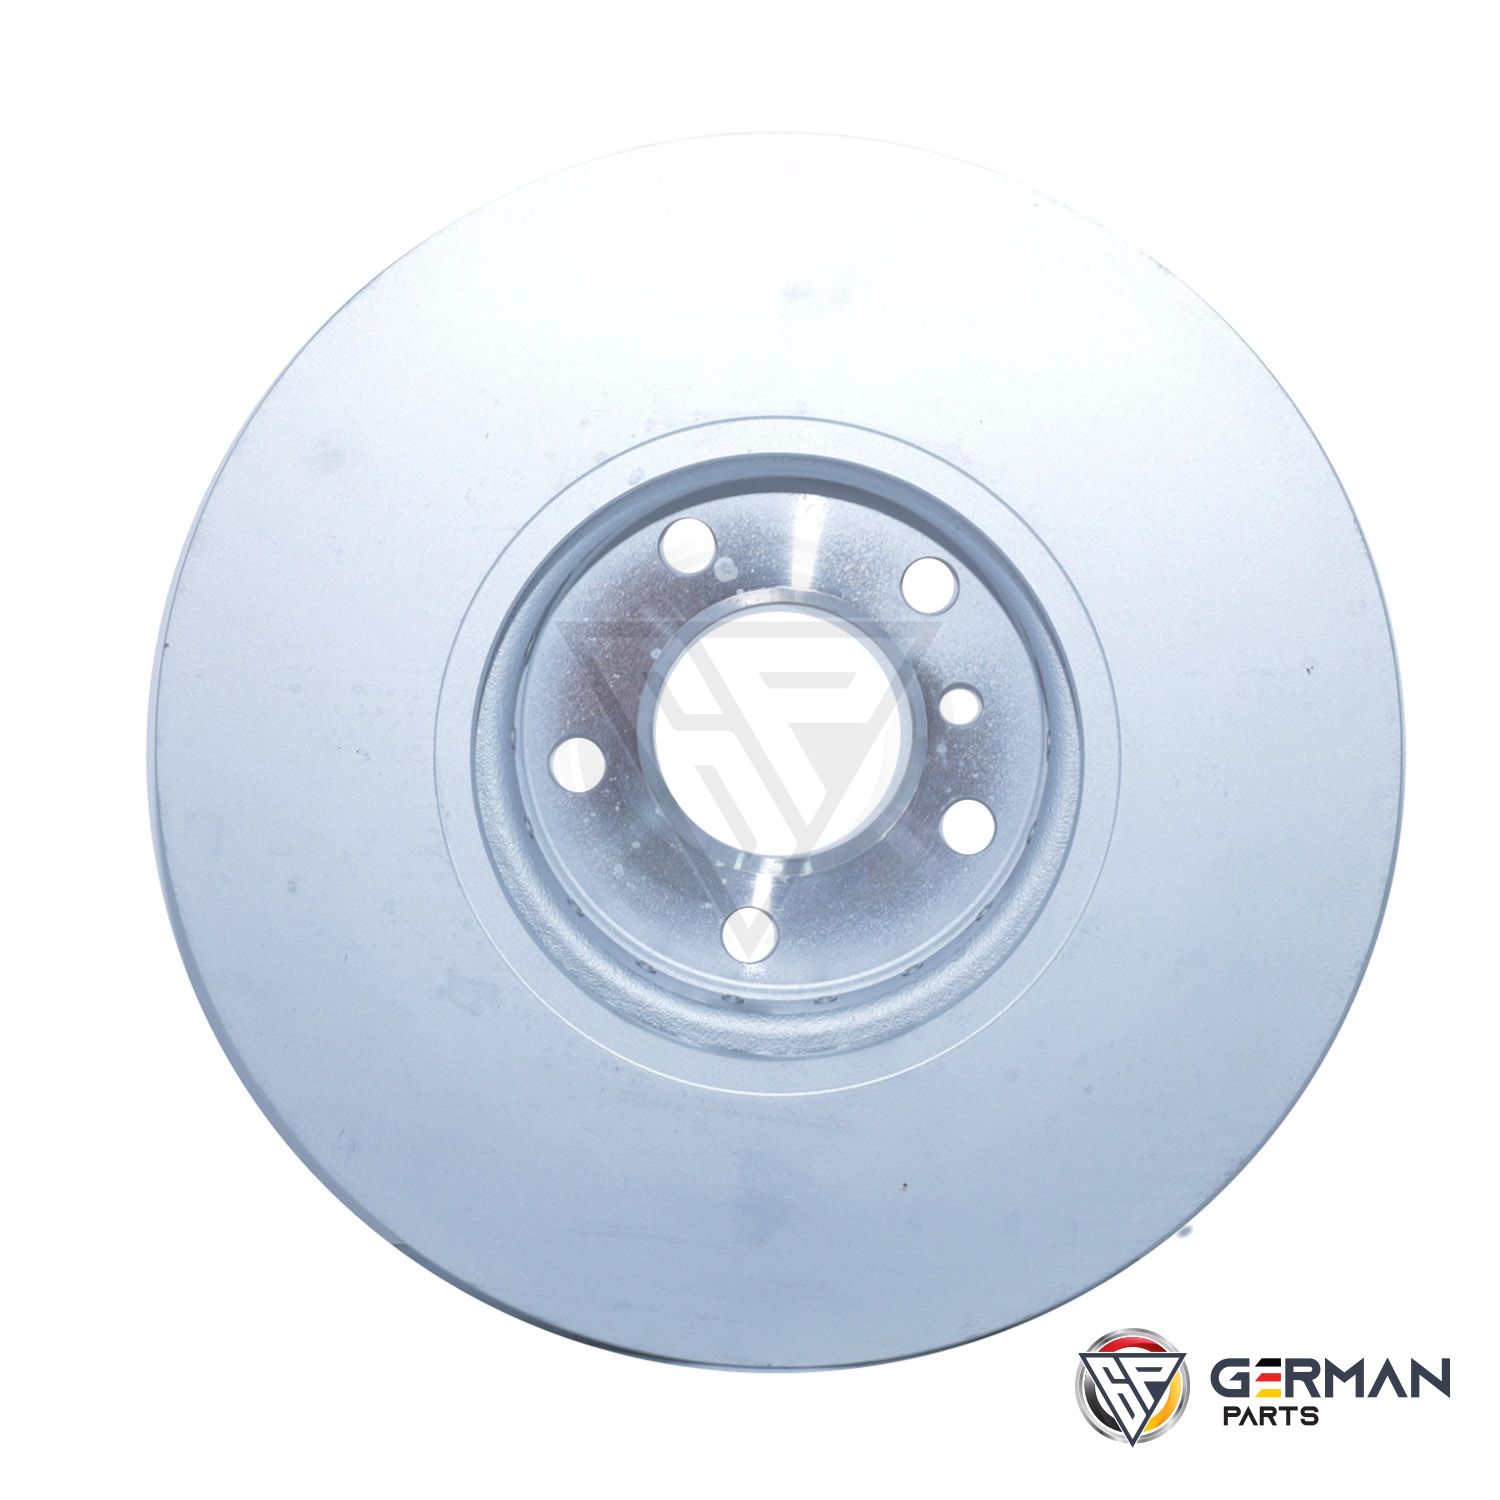 Buy BMW Front Brake Disc Left 34116785669 - German Parts